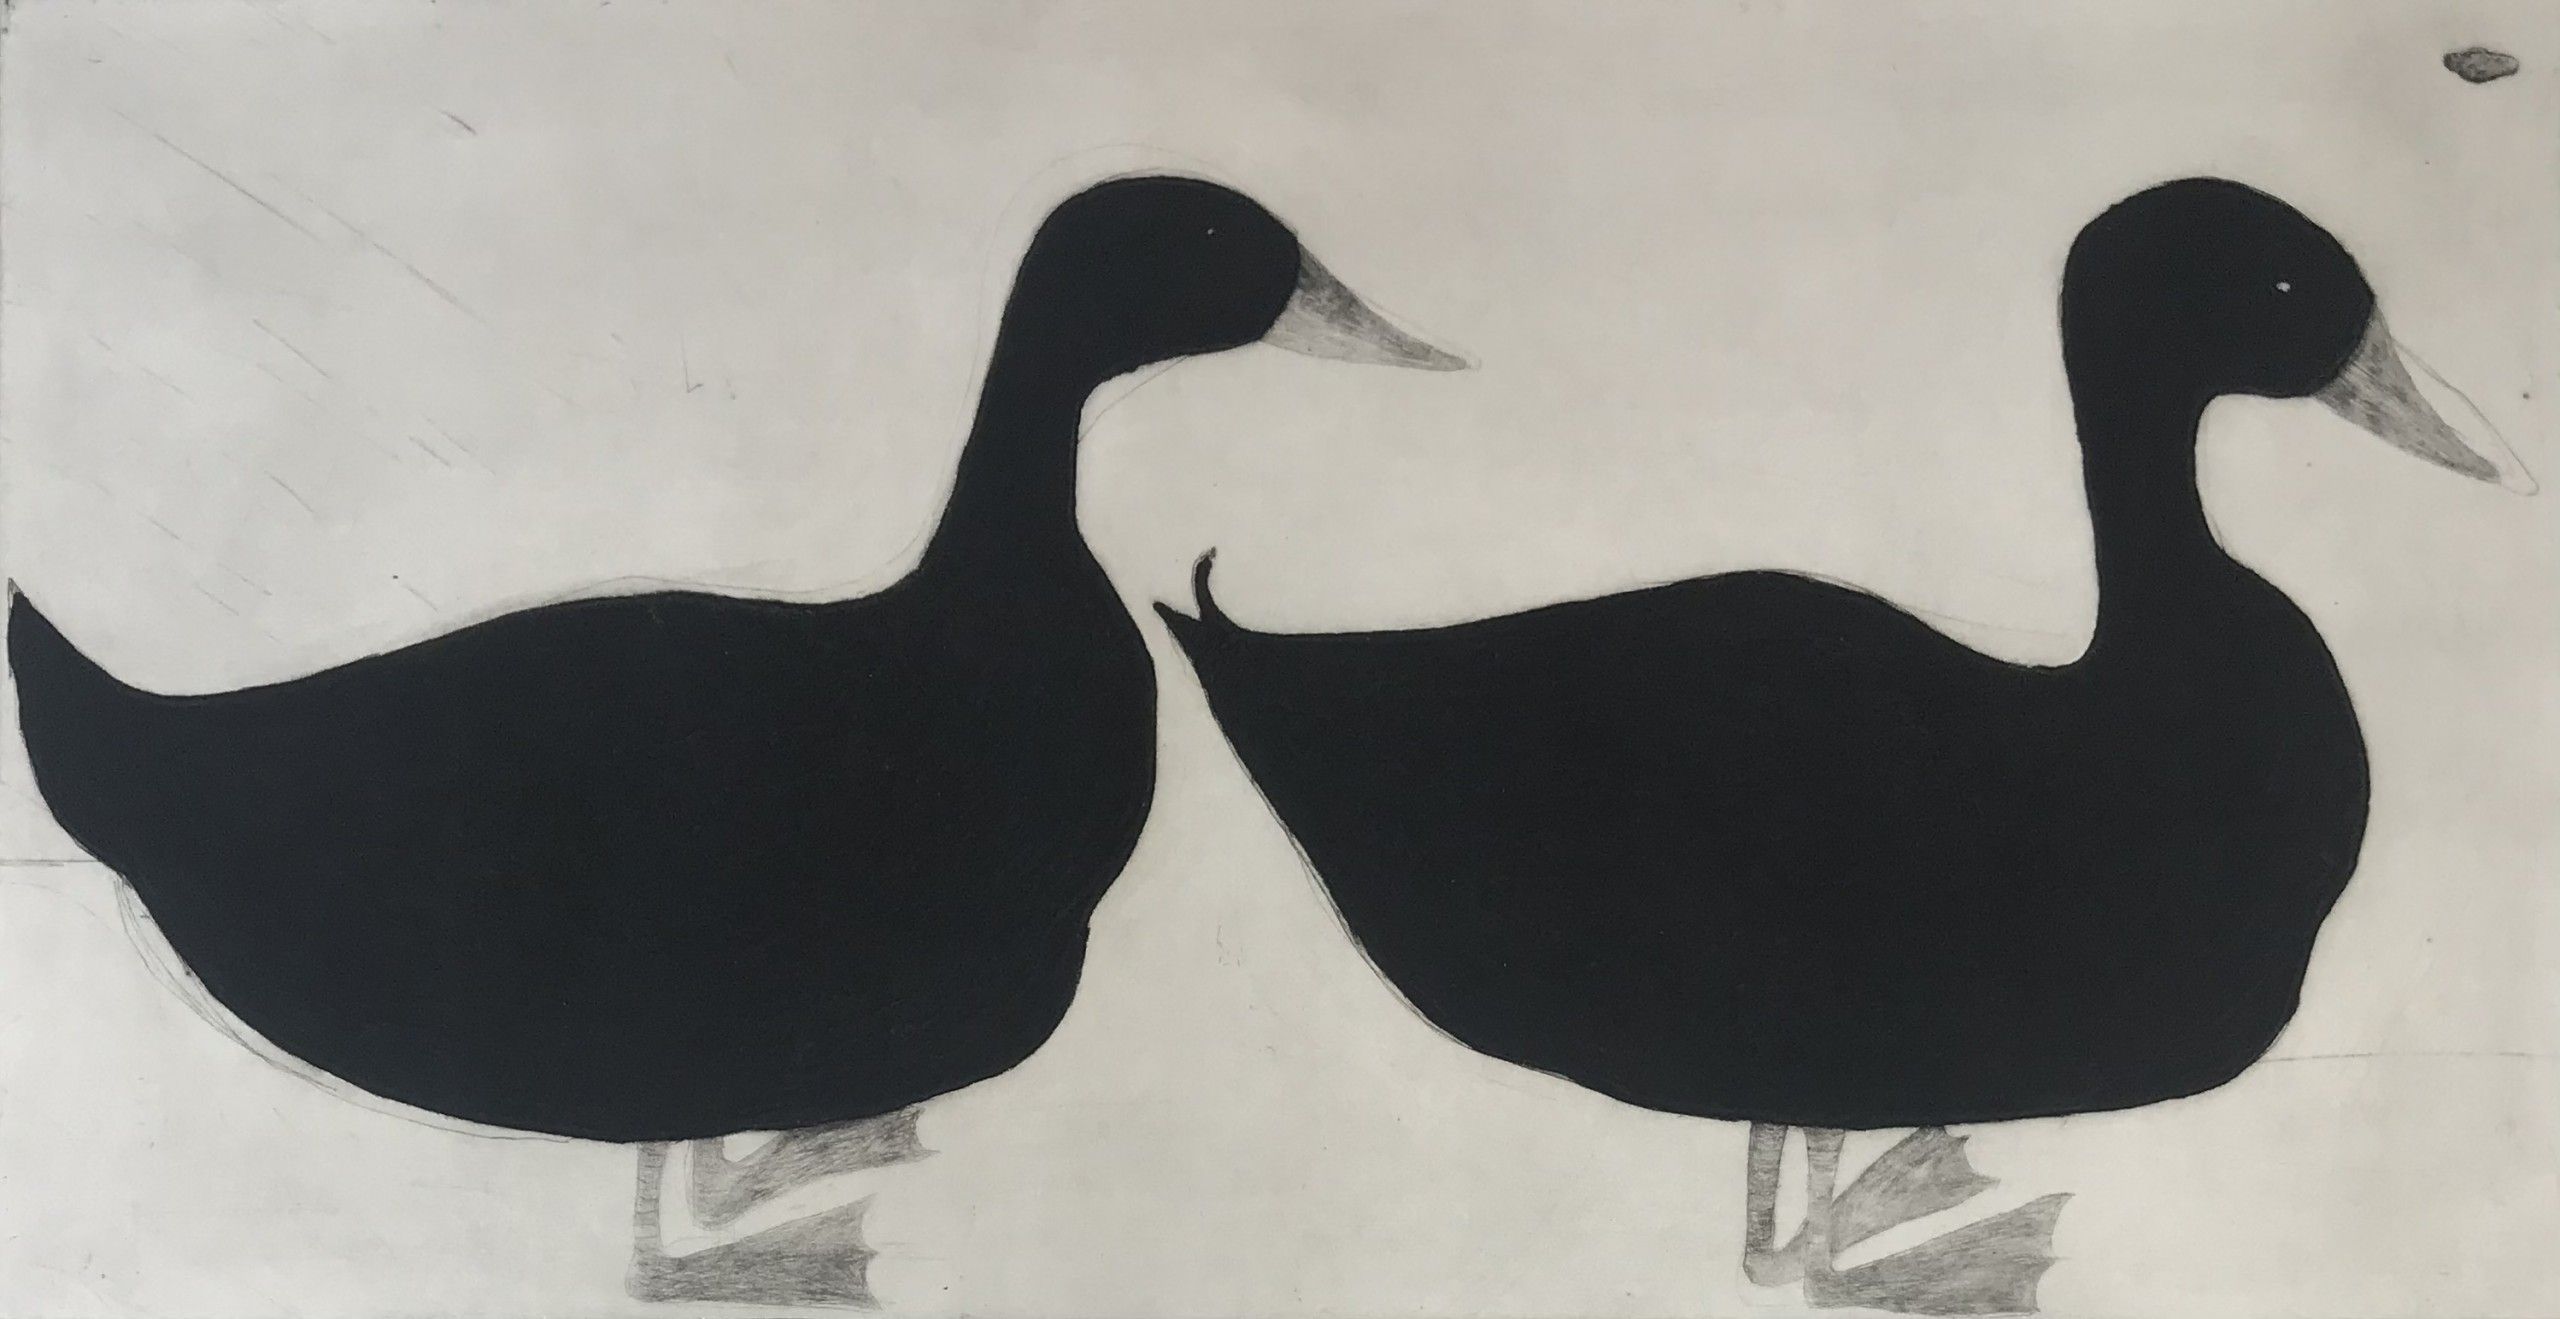 Ducks by Kate Boxer